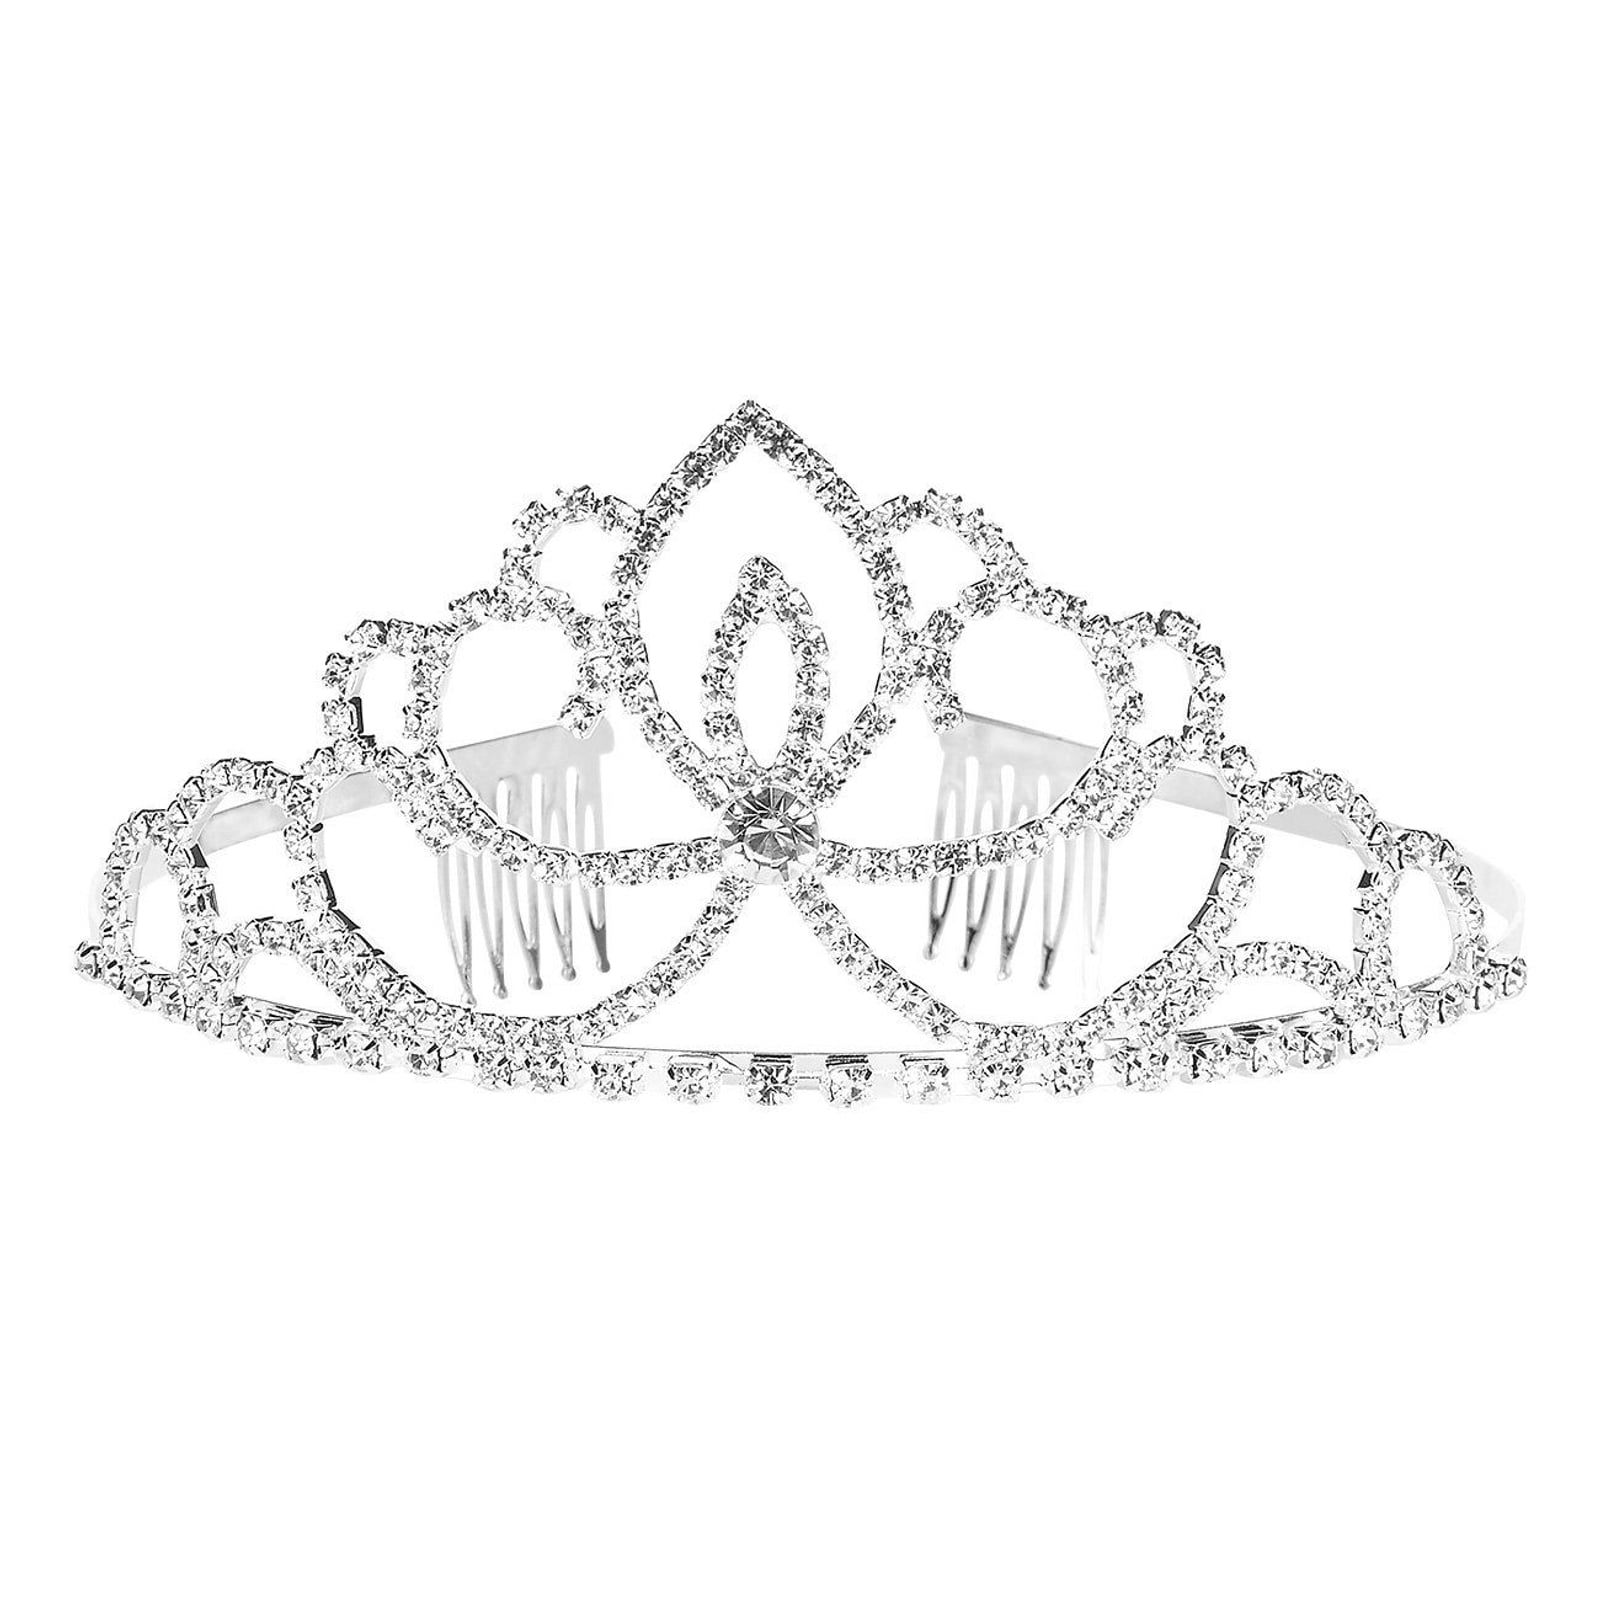 Bridal Pageant,Rhinestone,Crystal,Prom Wedding,Silver Crown Tiara,#6,Comb New! 